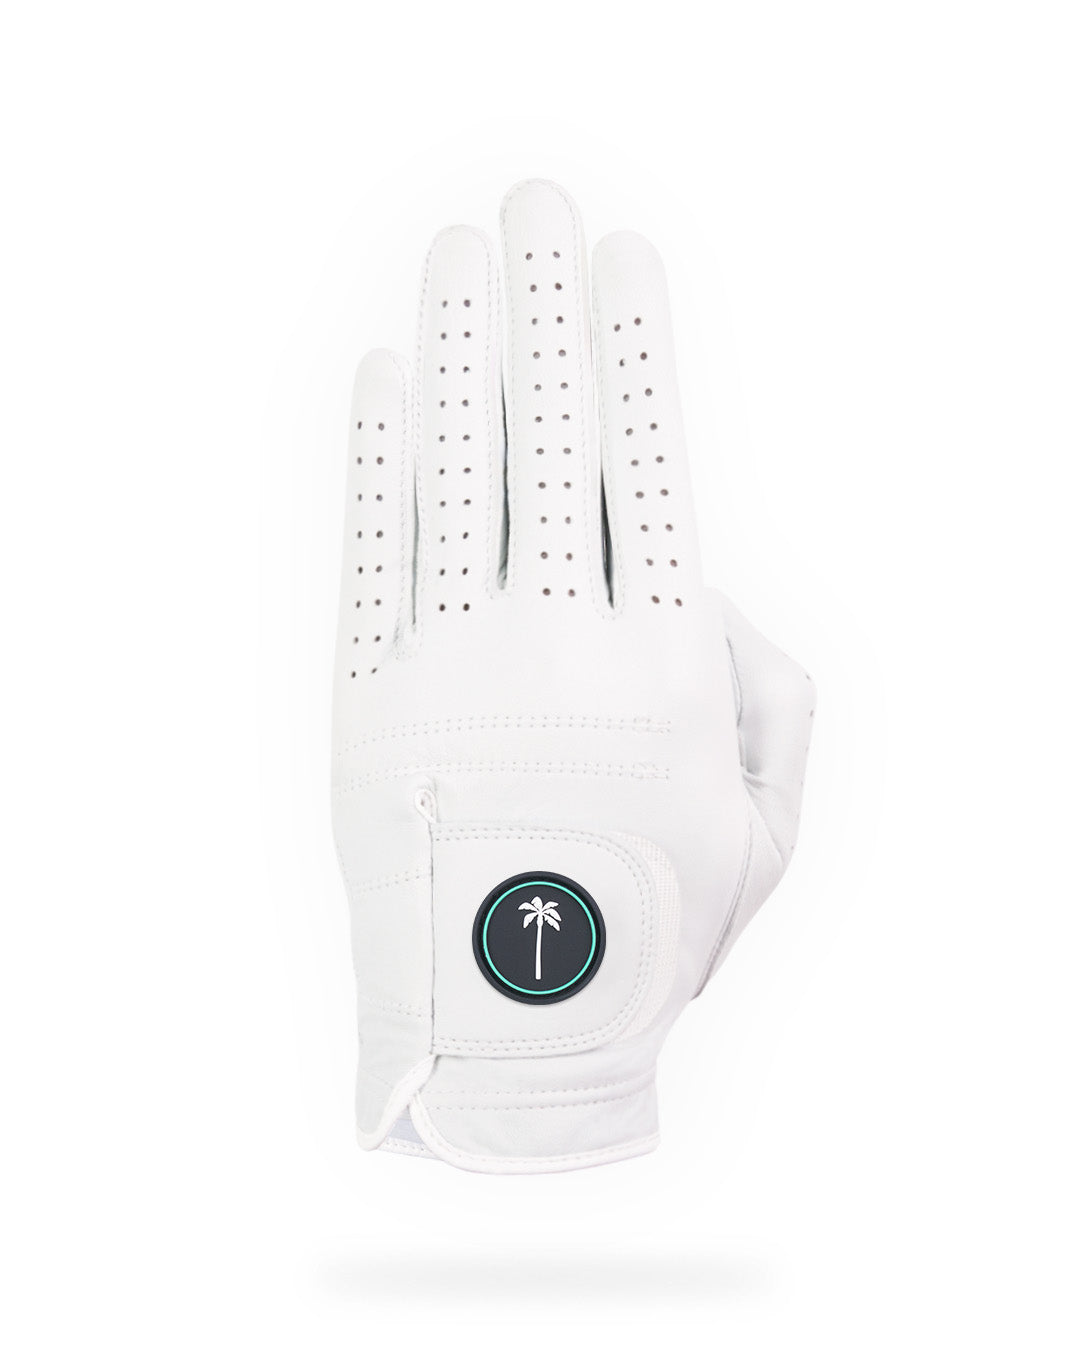 Women's Canvas Glove (White) - Palm Golf Co.